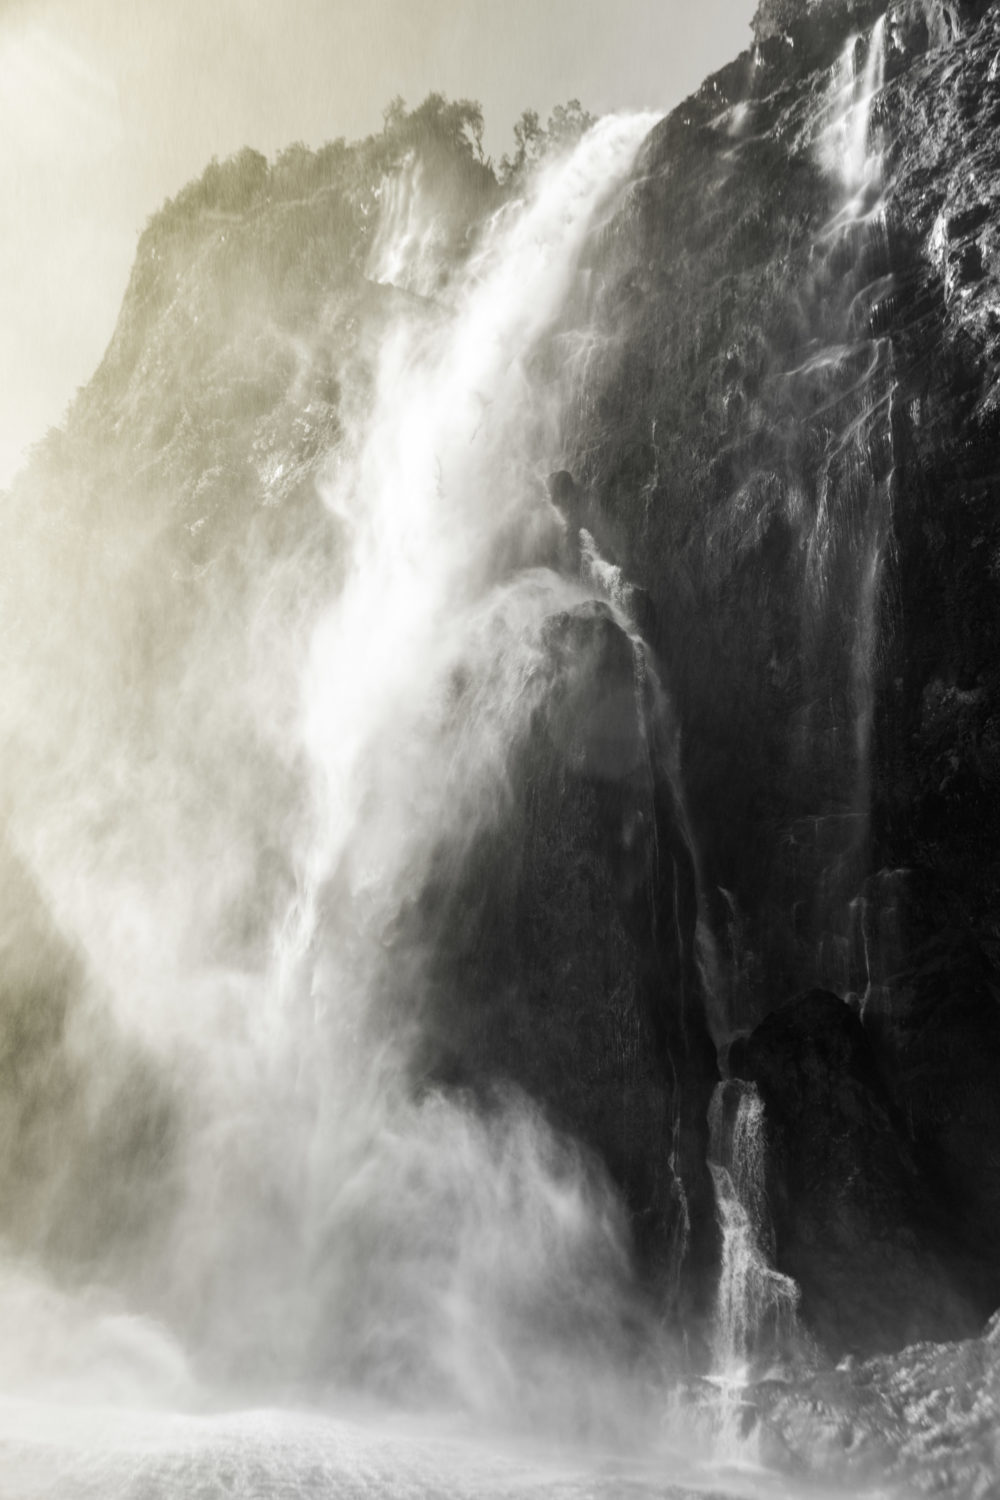 Majestic falls in Fiordland, New Zealand